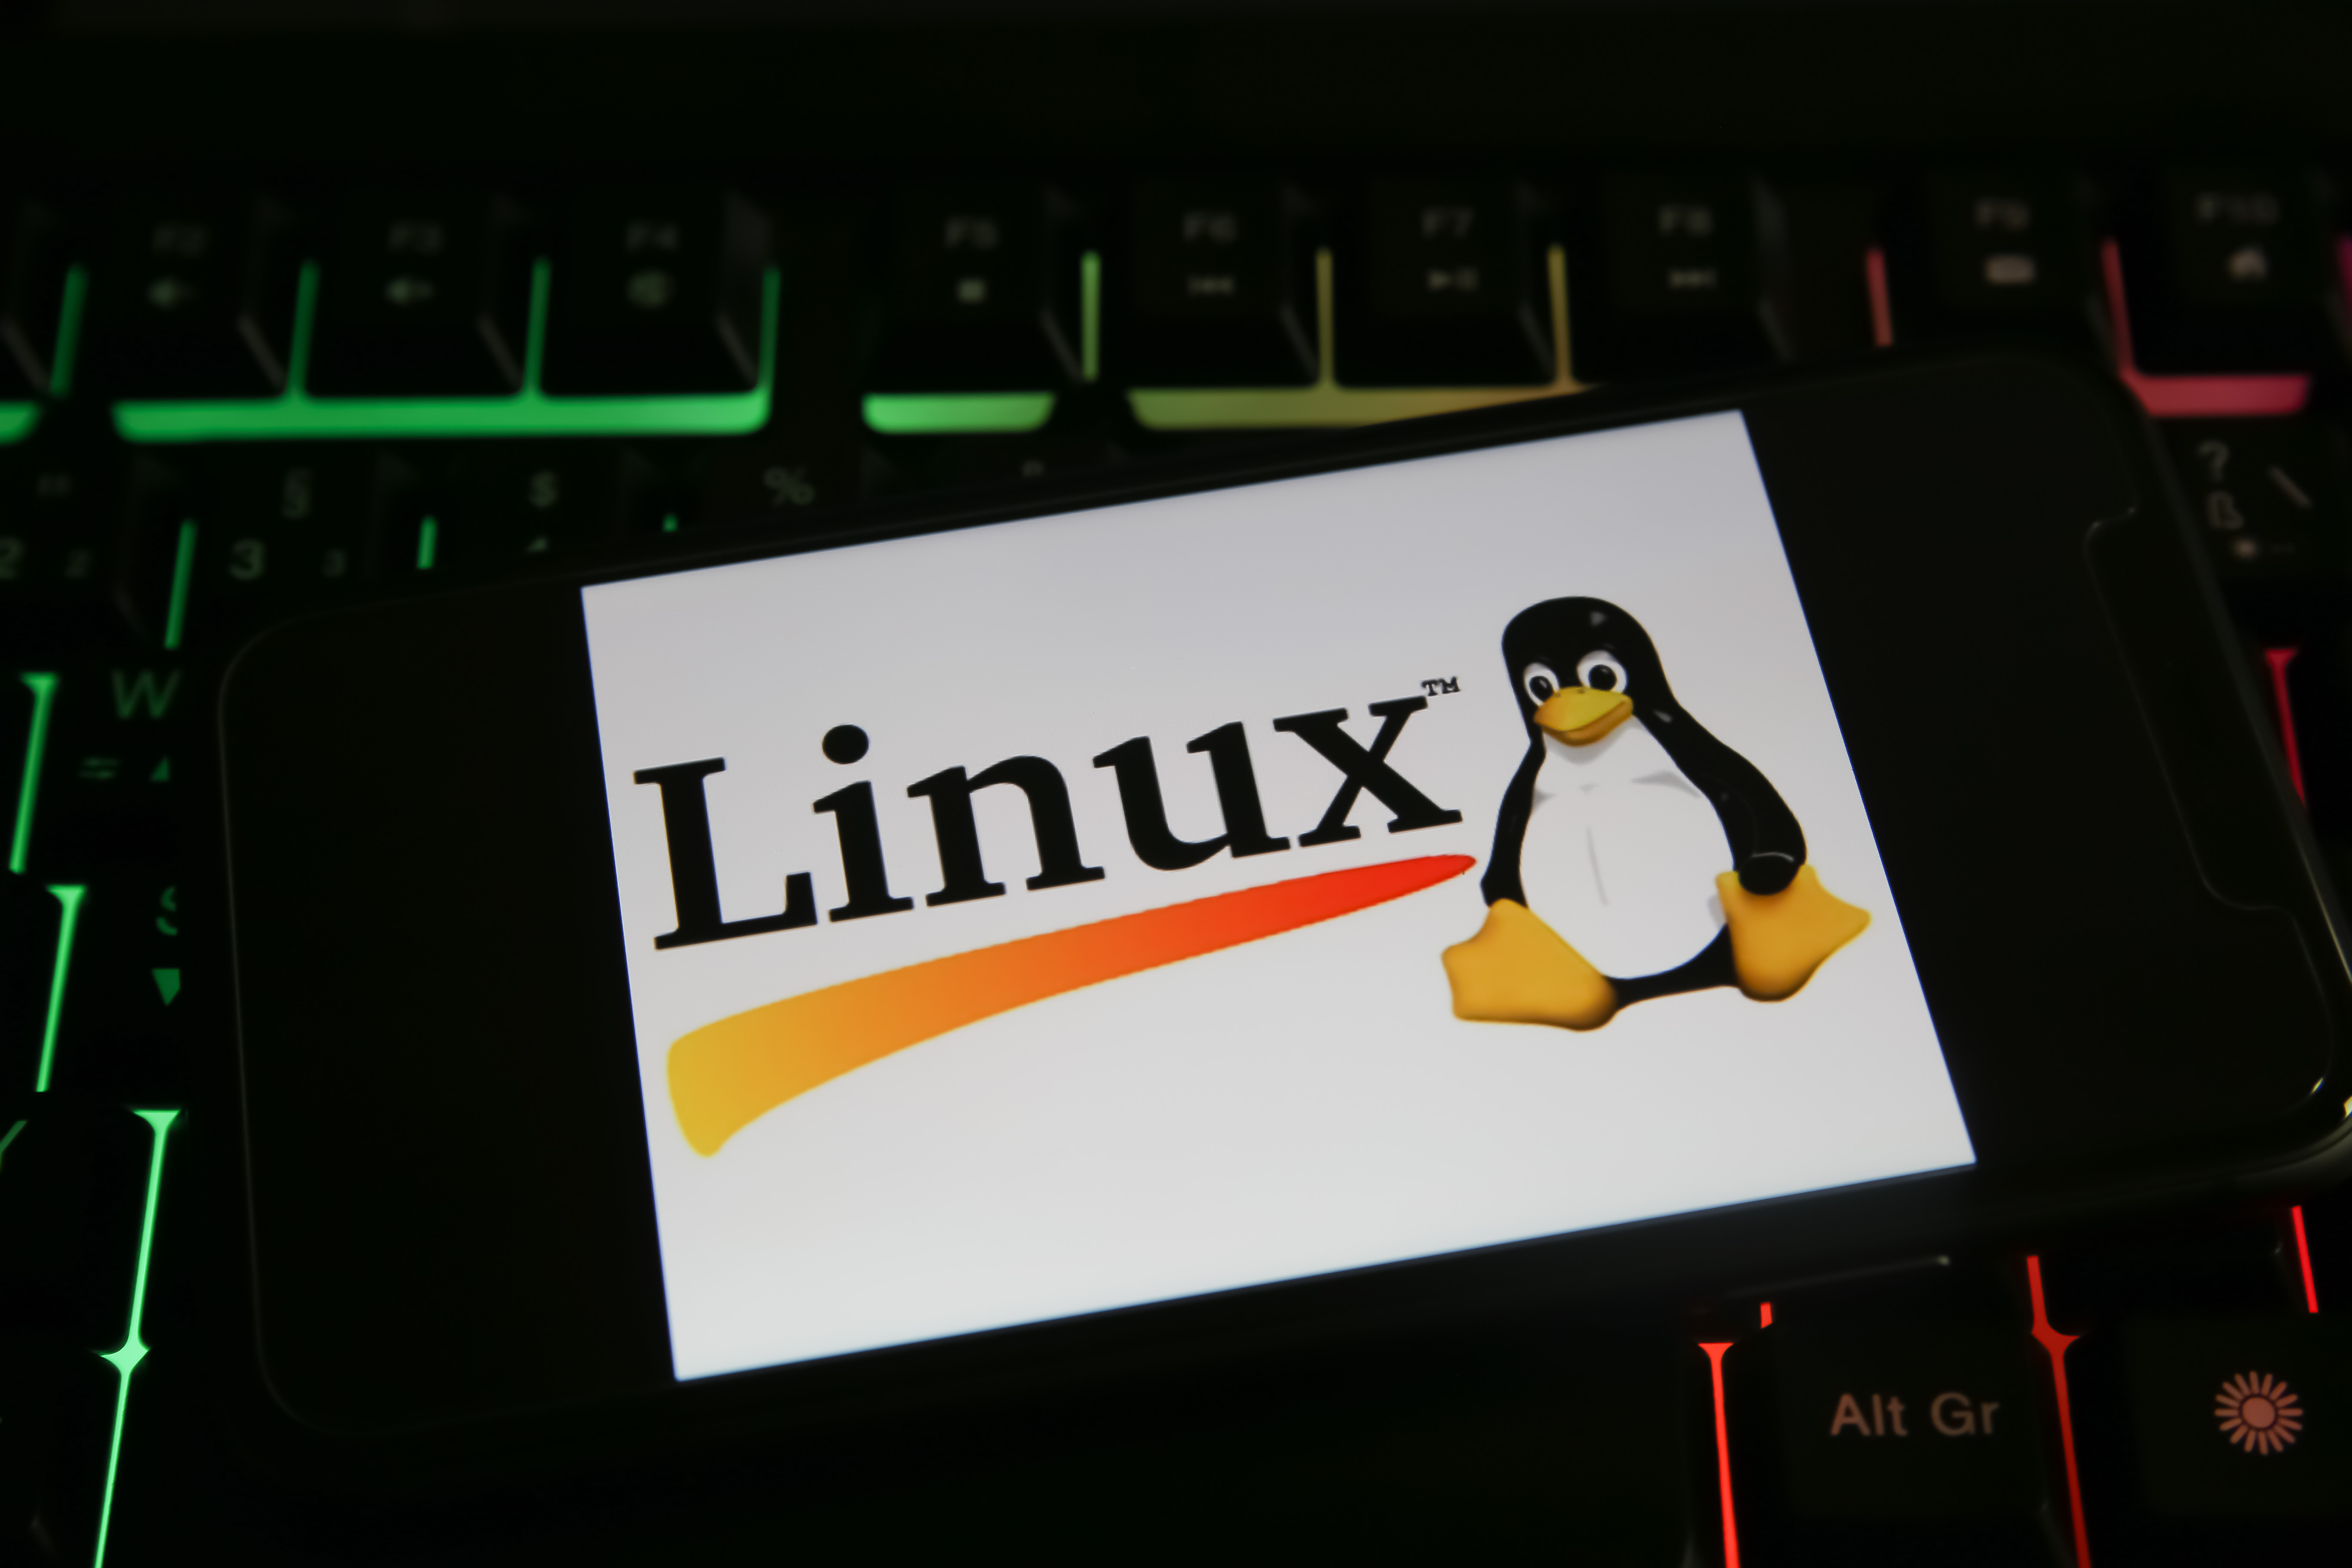 linux penguin logo on keyboard